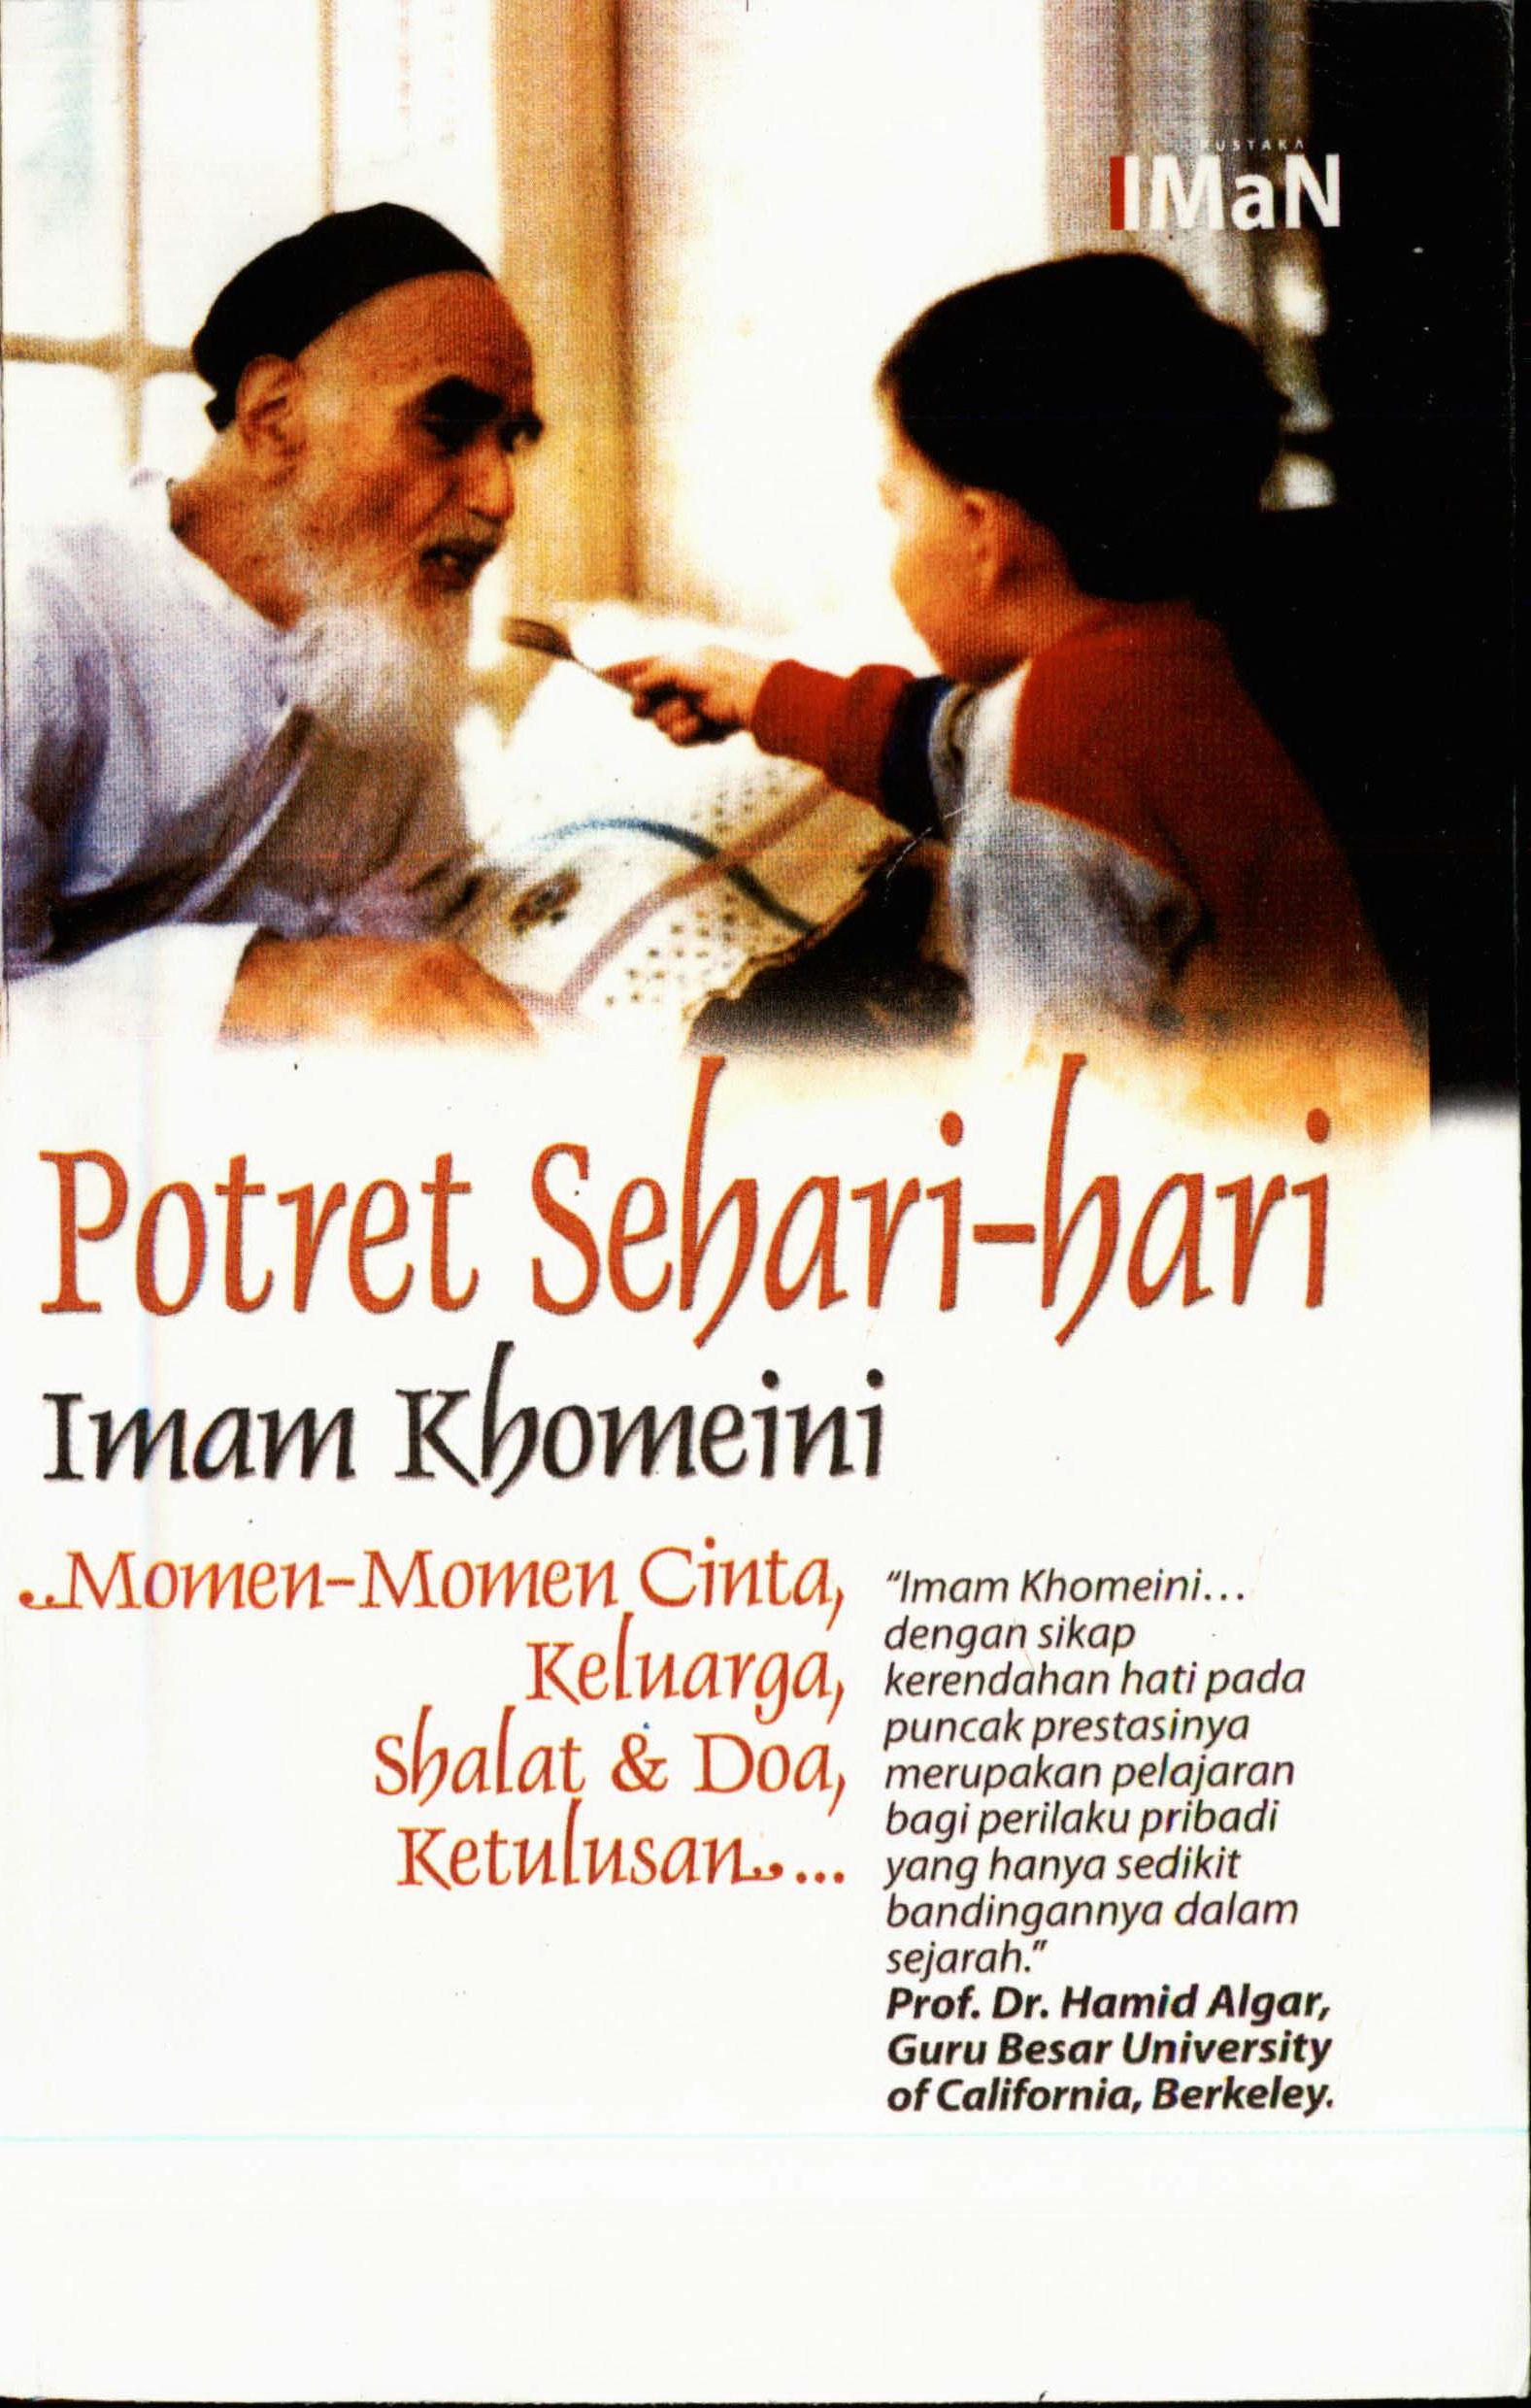 Potret Sehari-hari Imam Khomeini